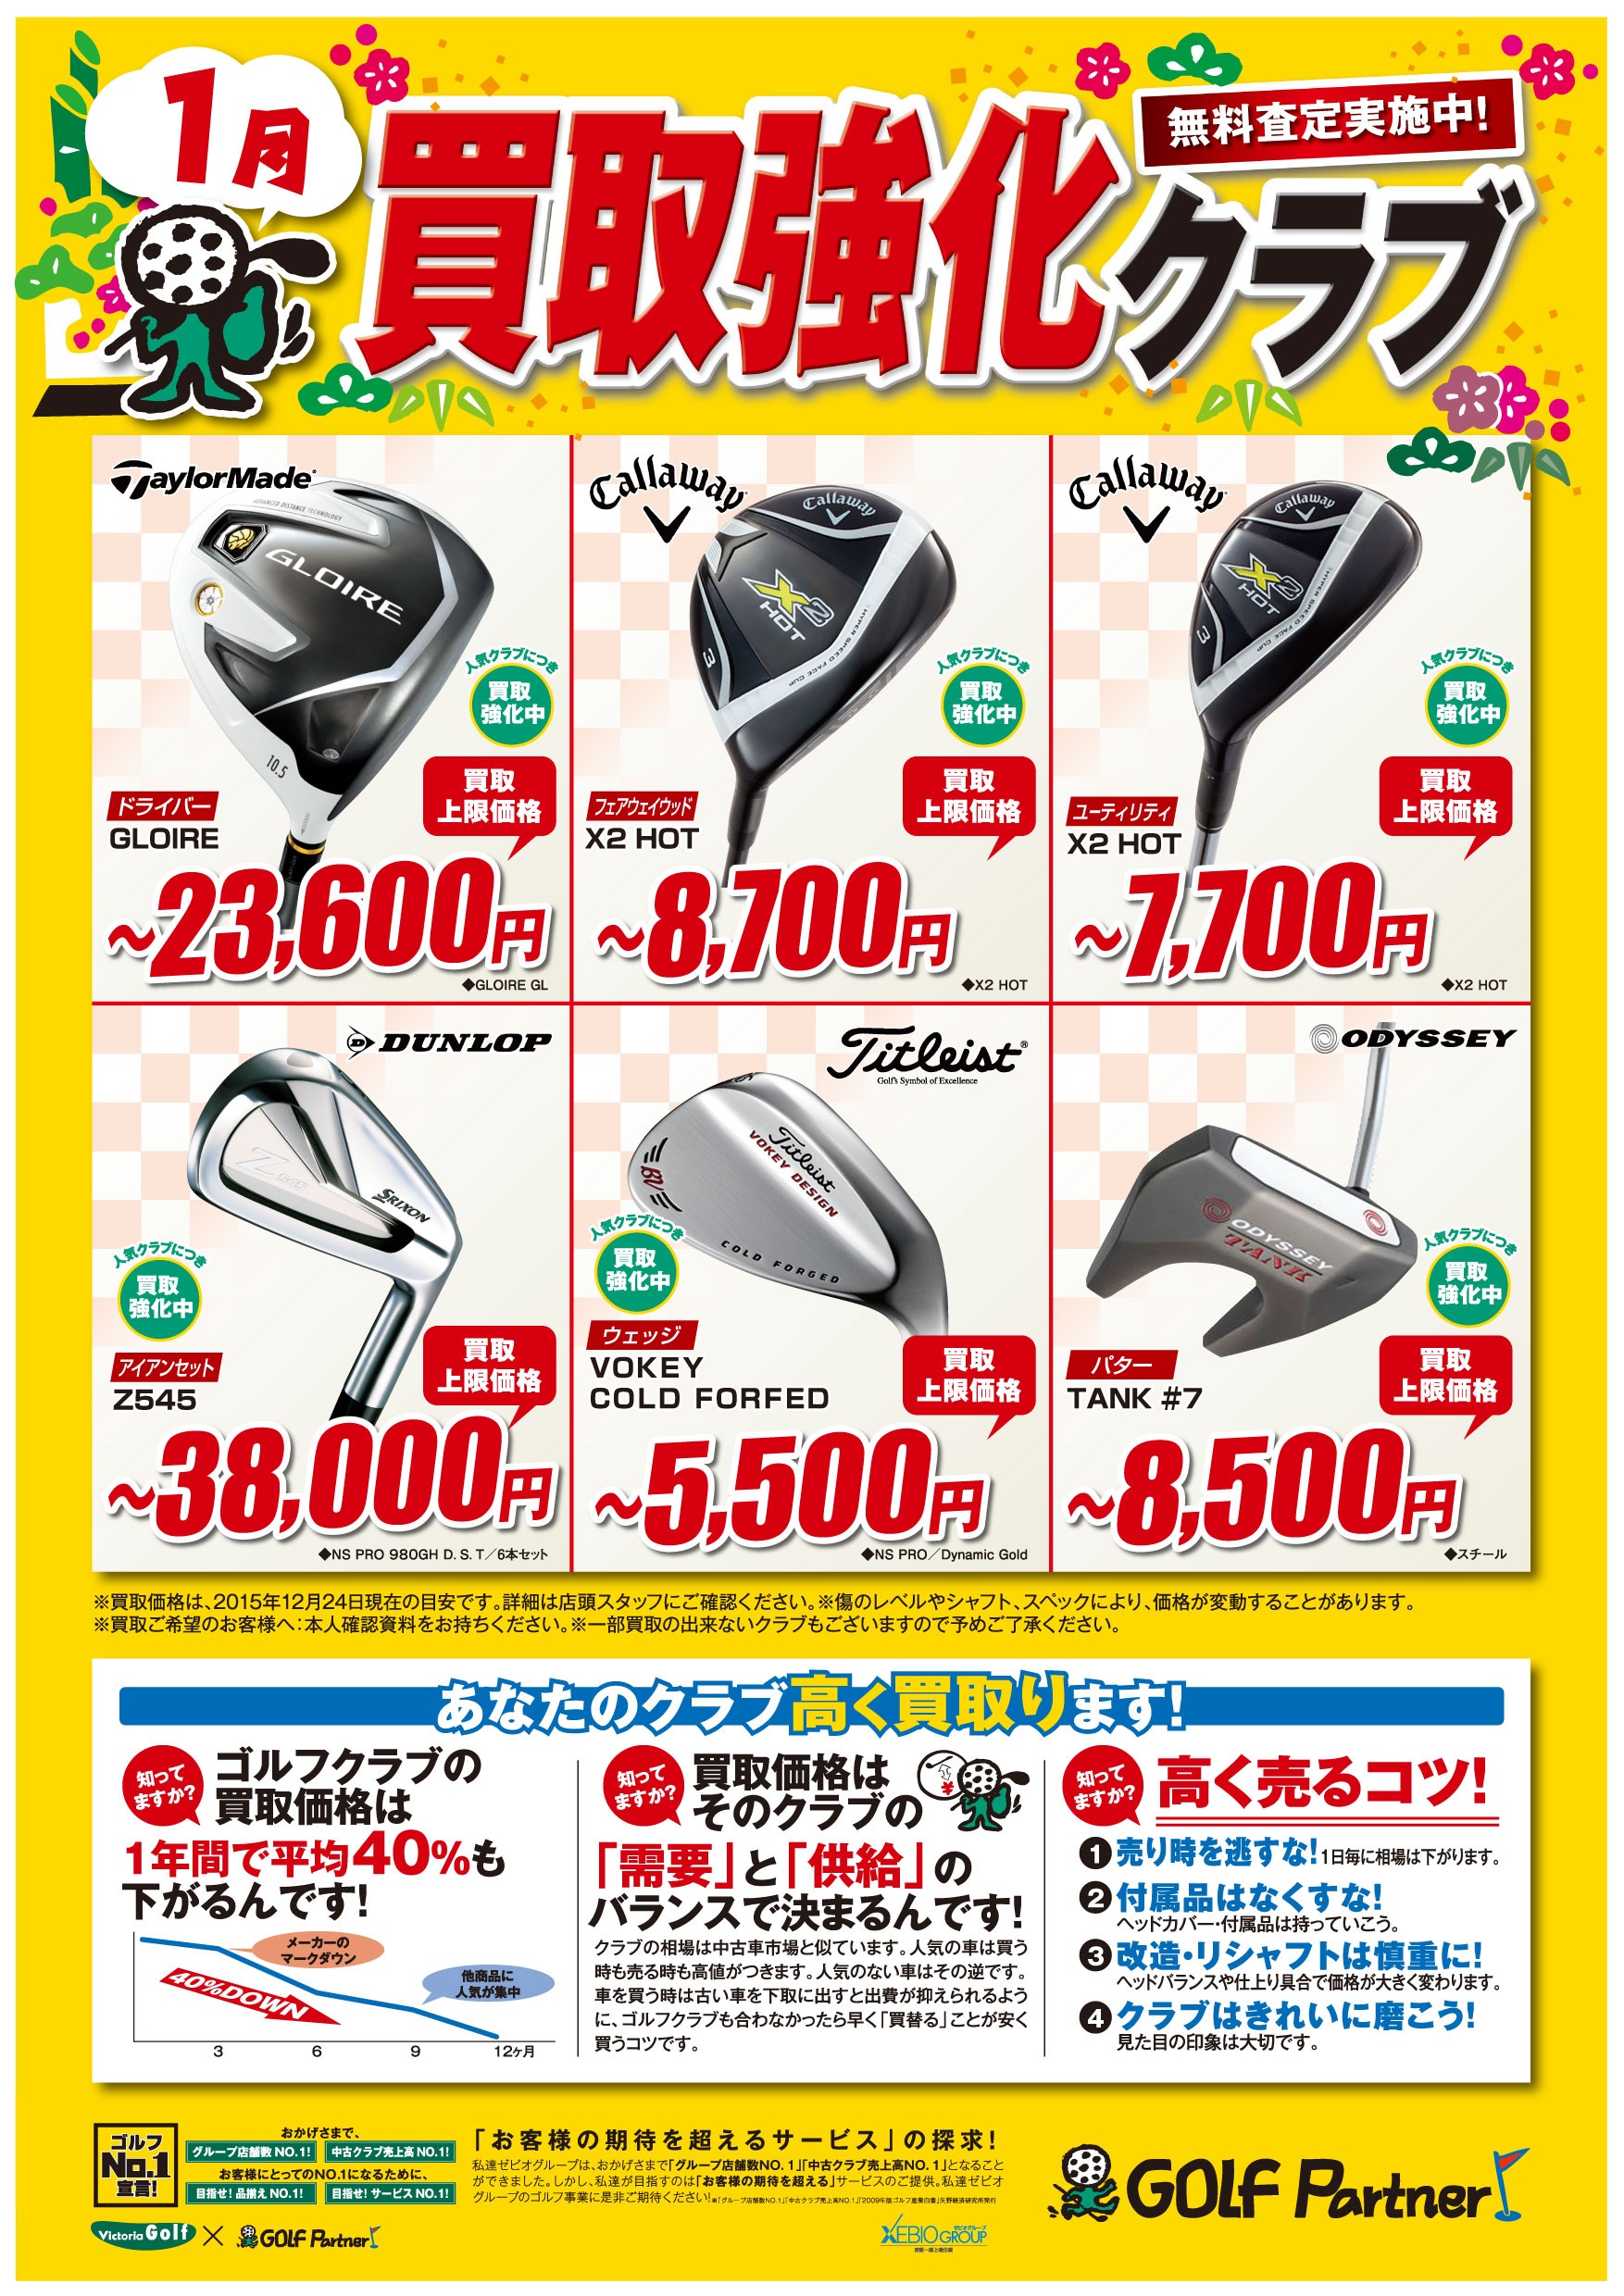 http://www.golfpartner.co.jp/585/1512_1kaitori_A3_GP%20%281%29.jpg